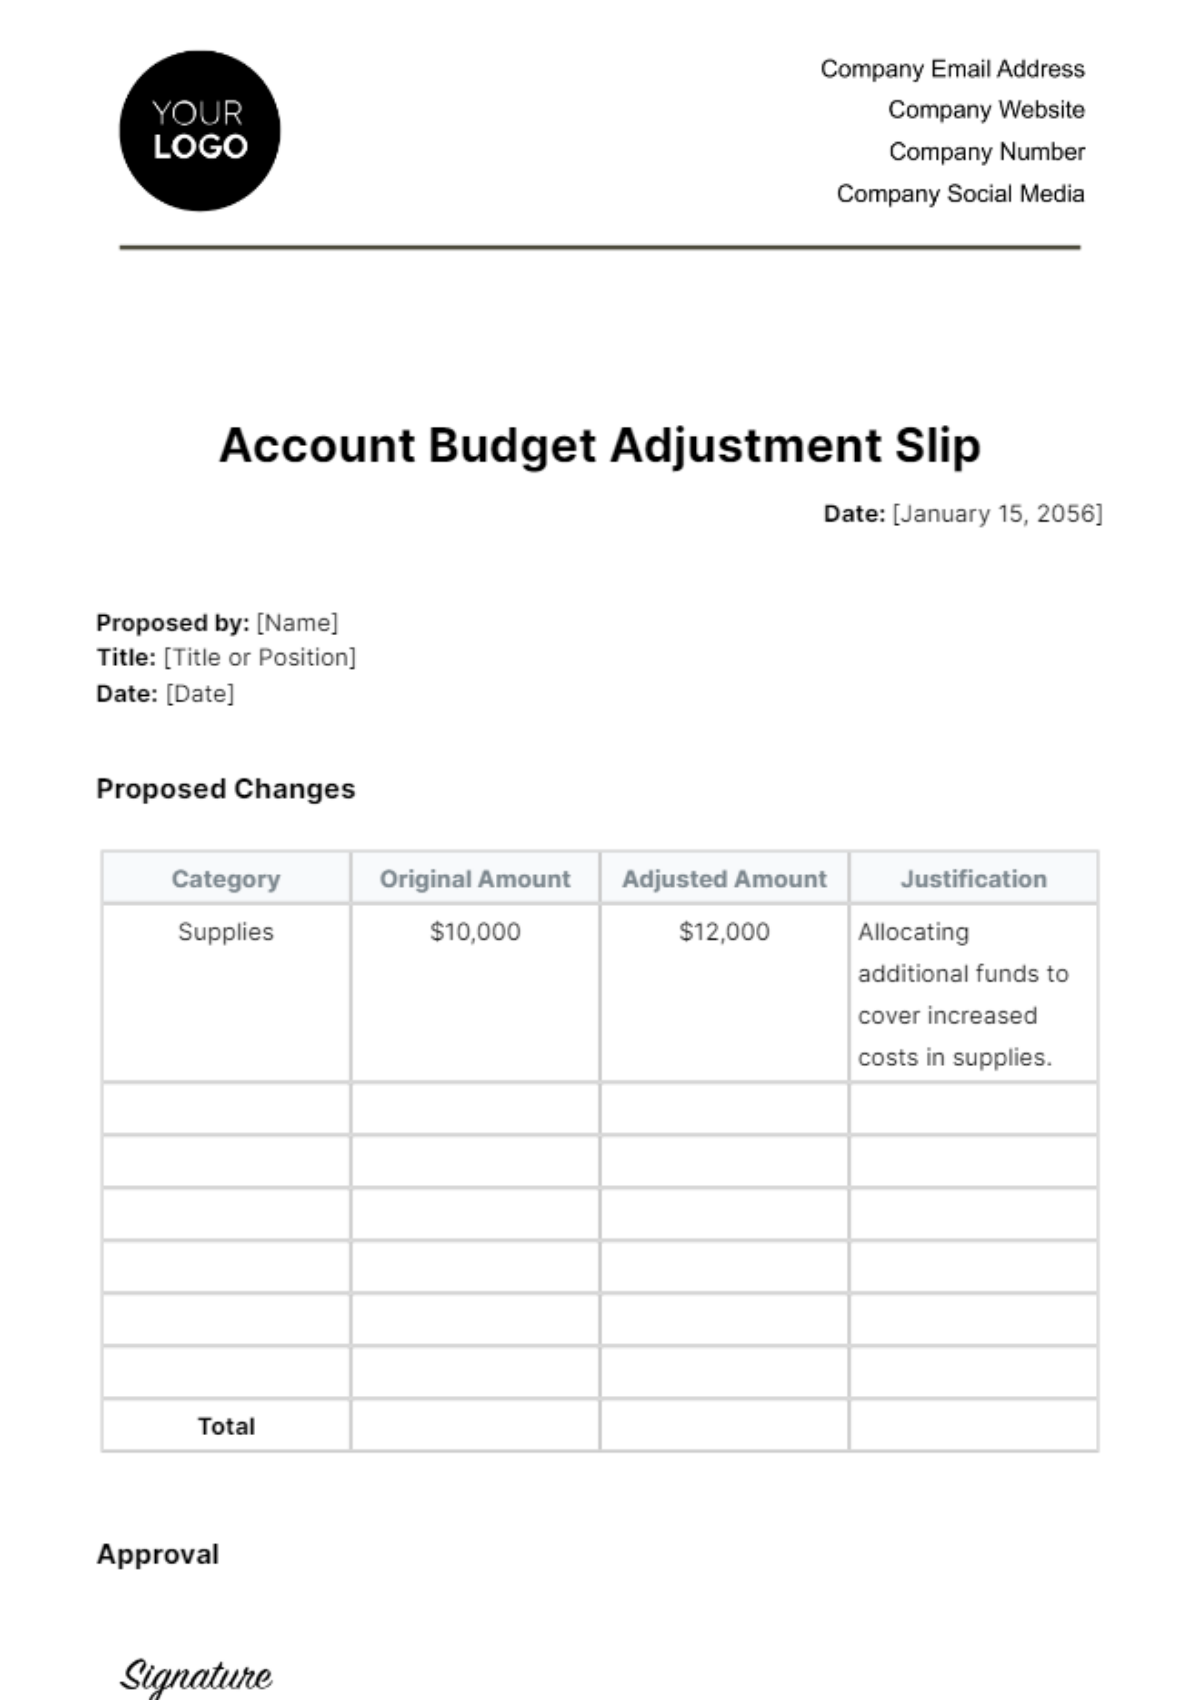 Account Budget Adjustment Slip Template